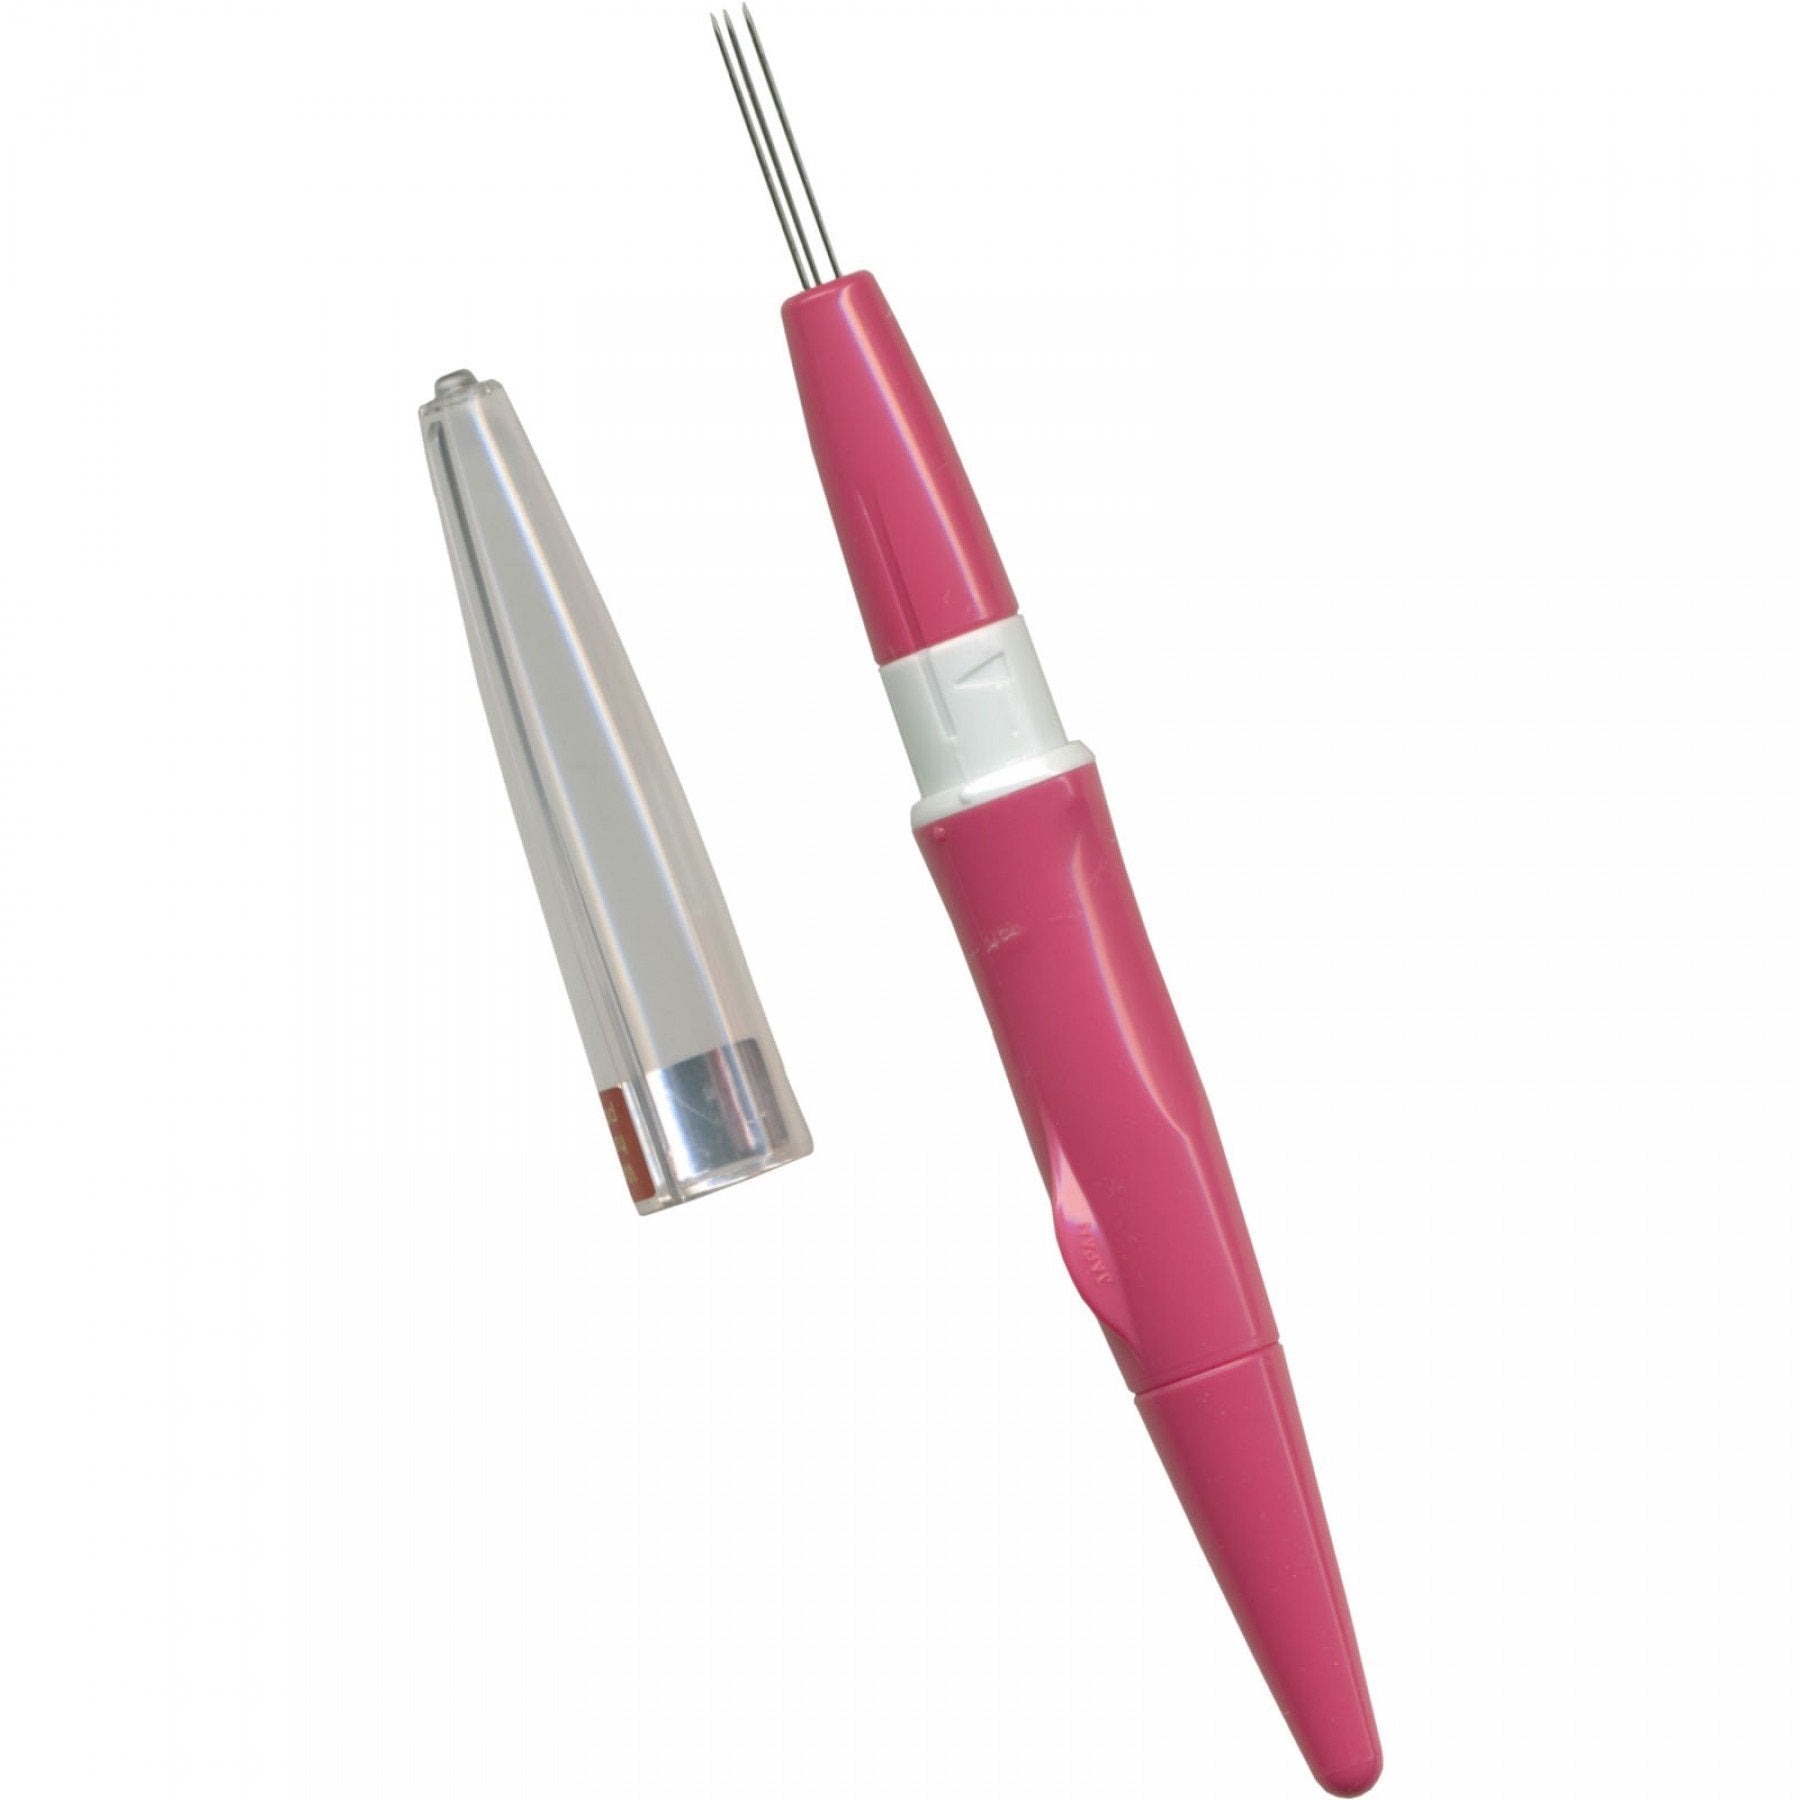 Pen Style Needle Felting tool